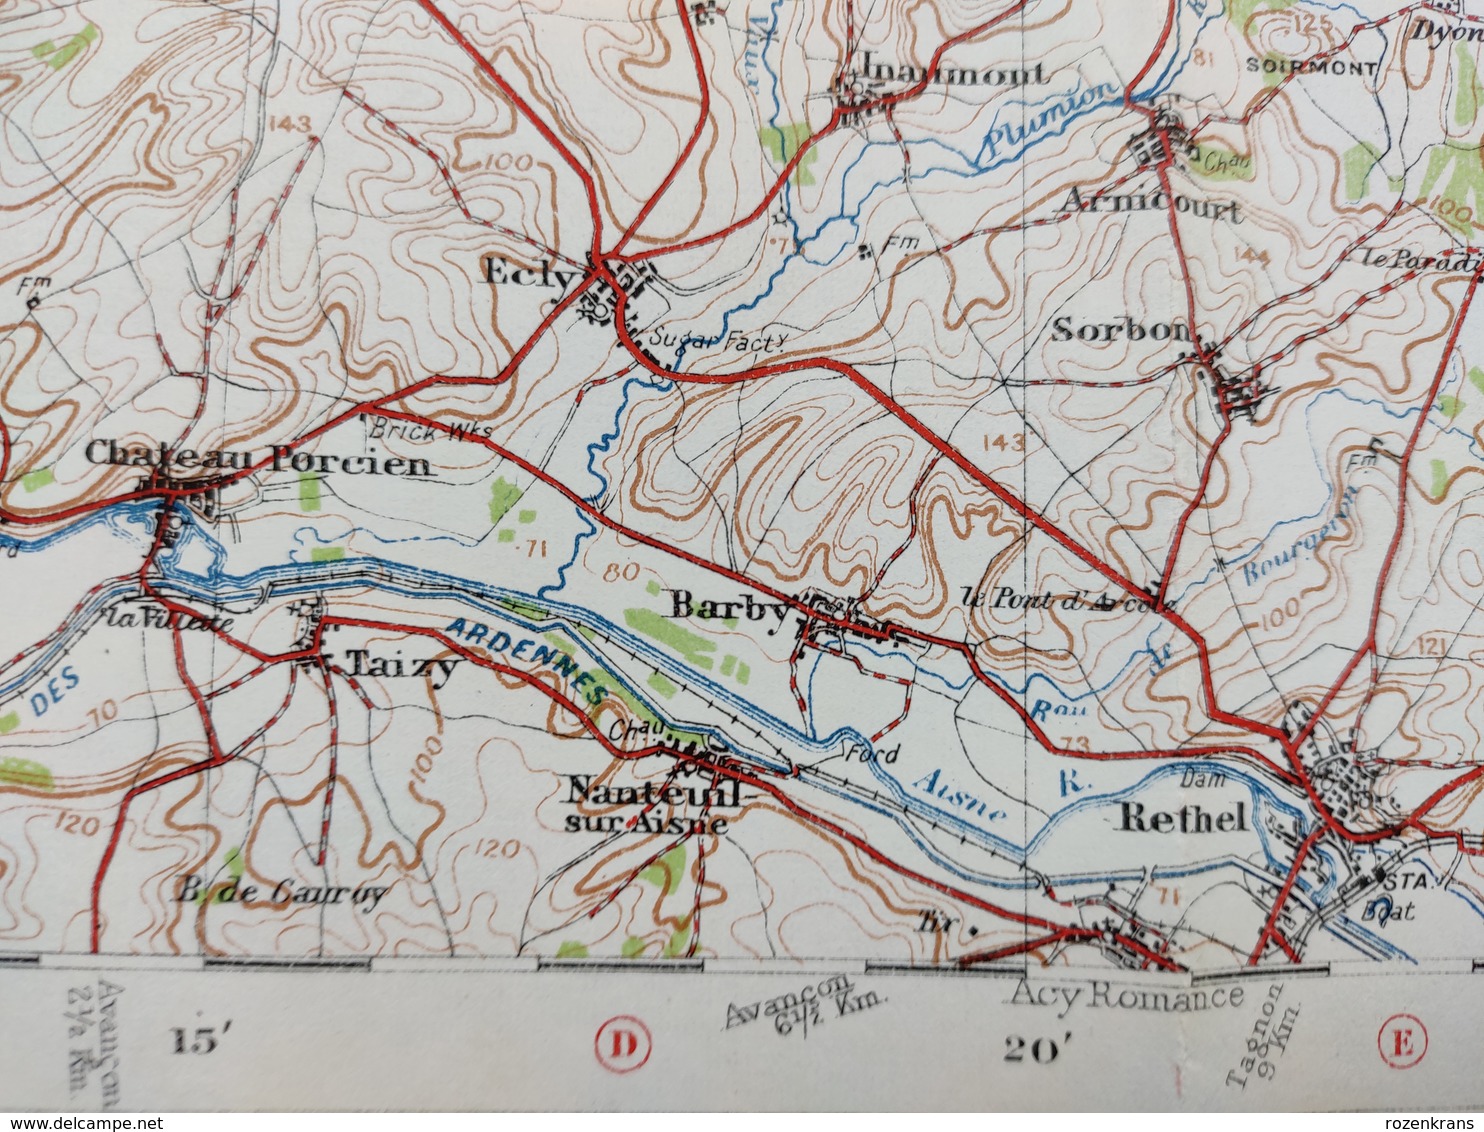 Carte Topographique Militaire UK War Office 1915 World War 1 WW1 Charlesville Mezieres Sedan Rocroi Hirson Sugny Rethel - Topographical Maps